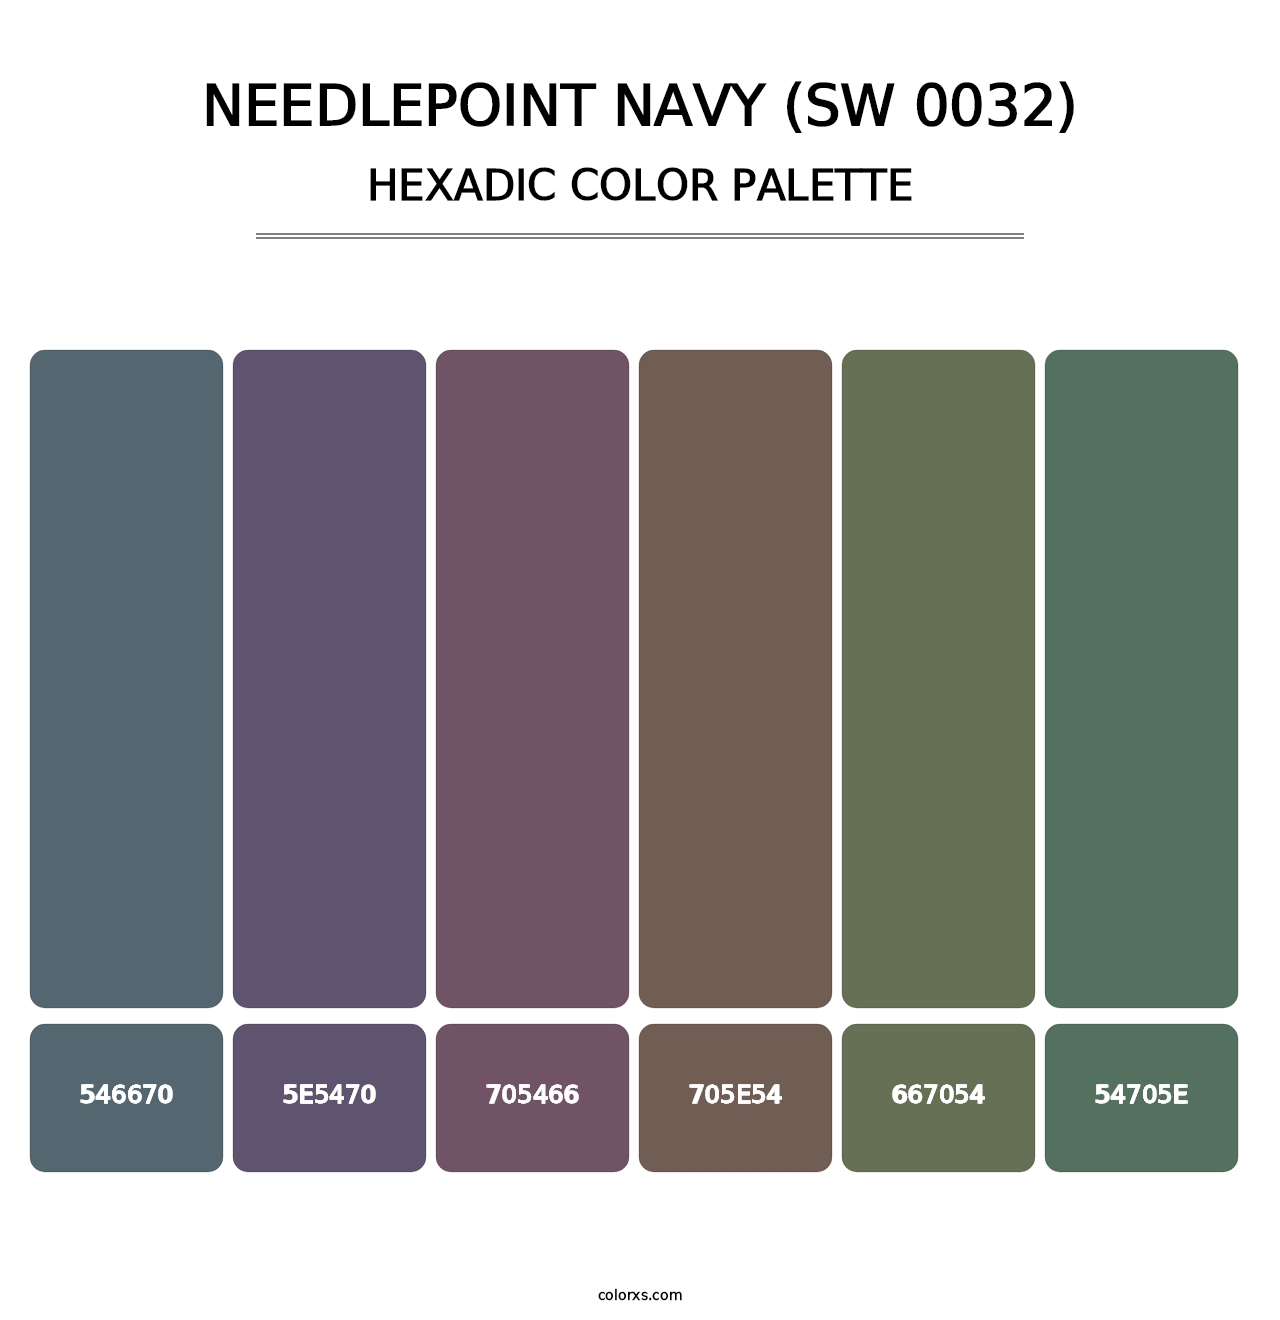 Needlepoint Navy (SW 0032) - Hexadic Color Palette